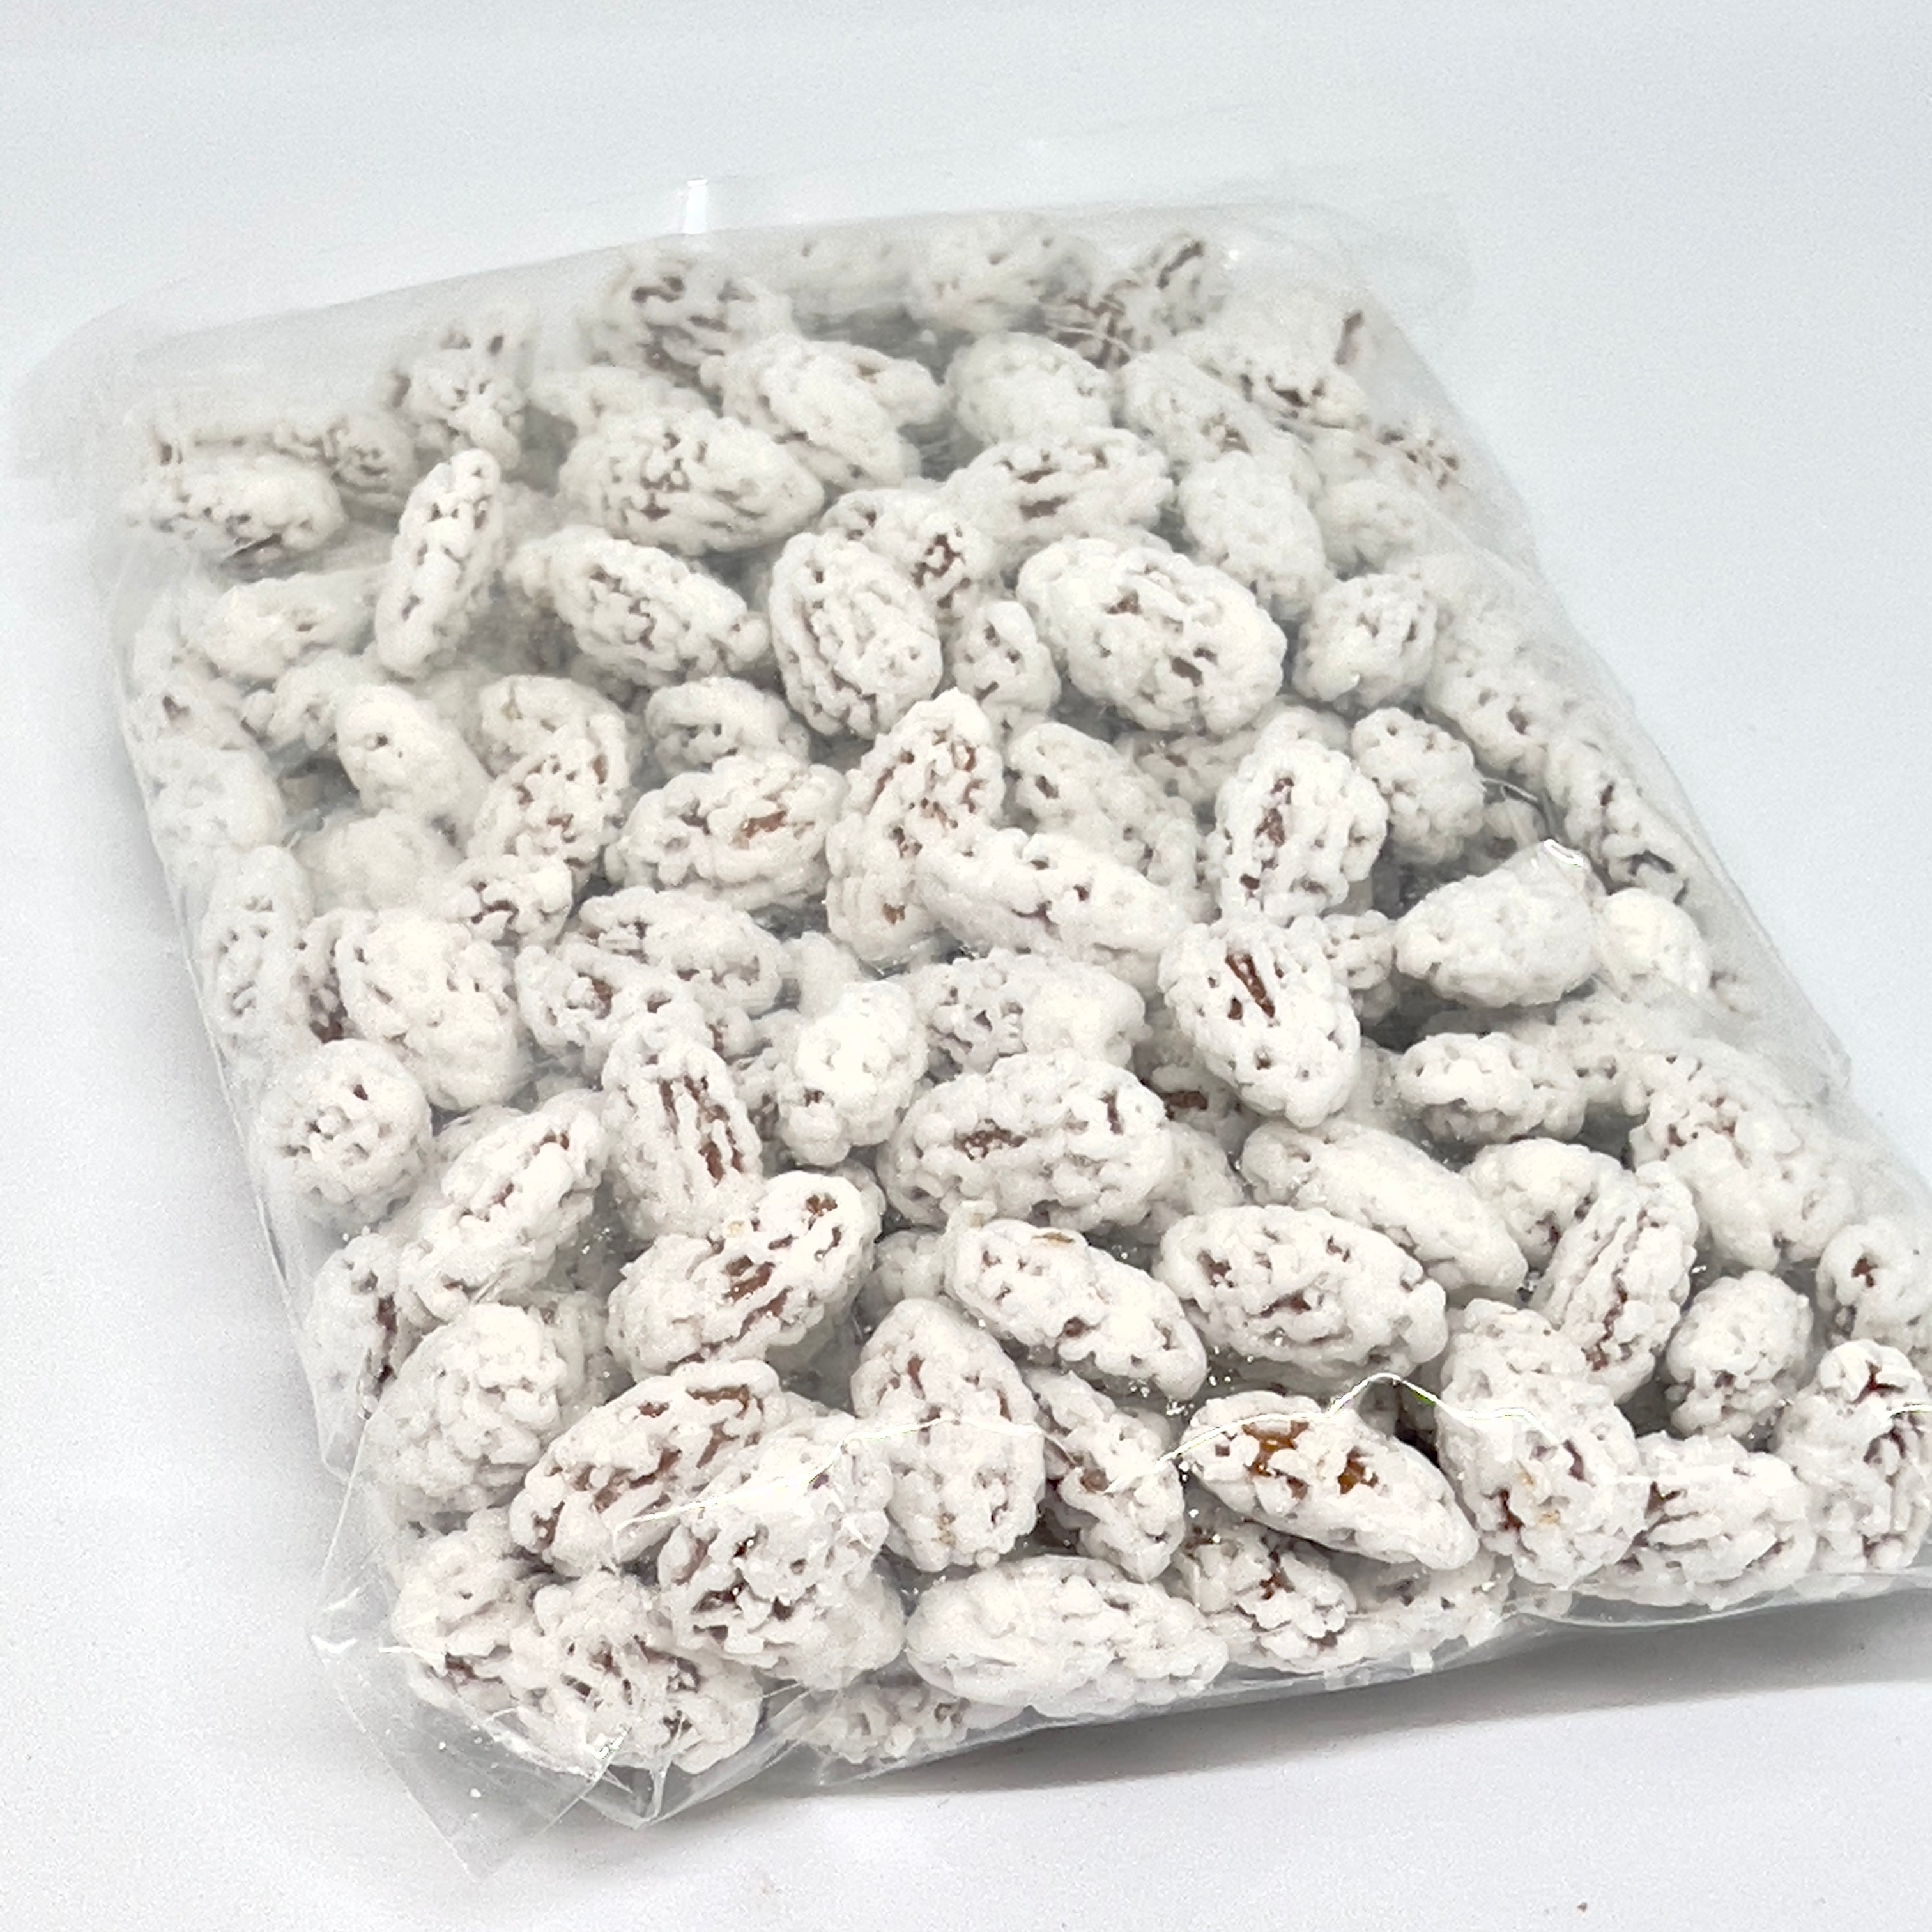 HESARI AFG Sugar Coated Almonds 400g